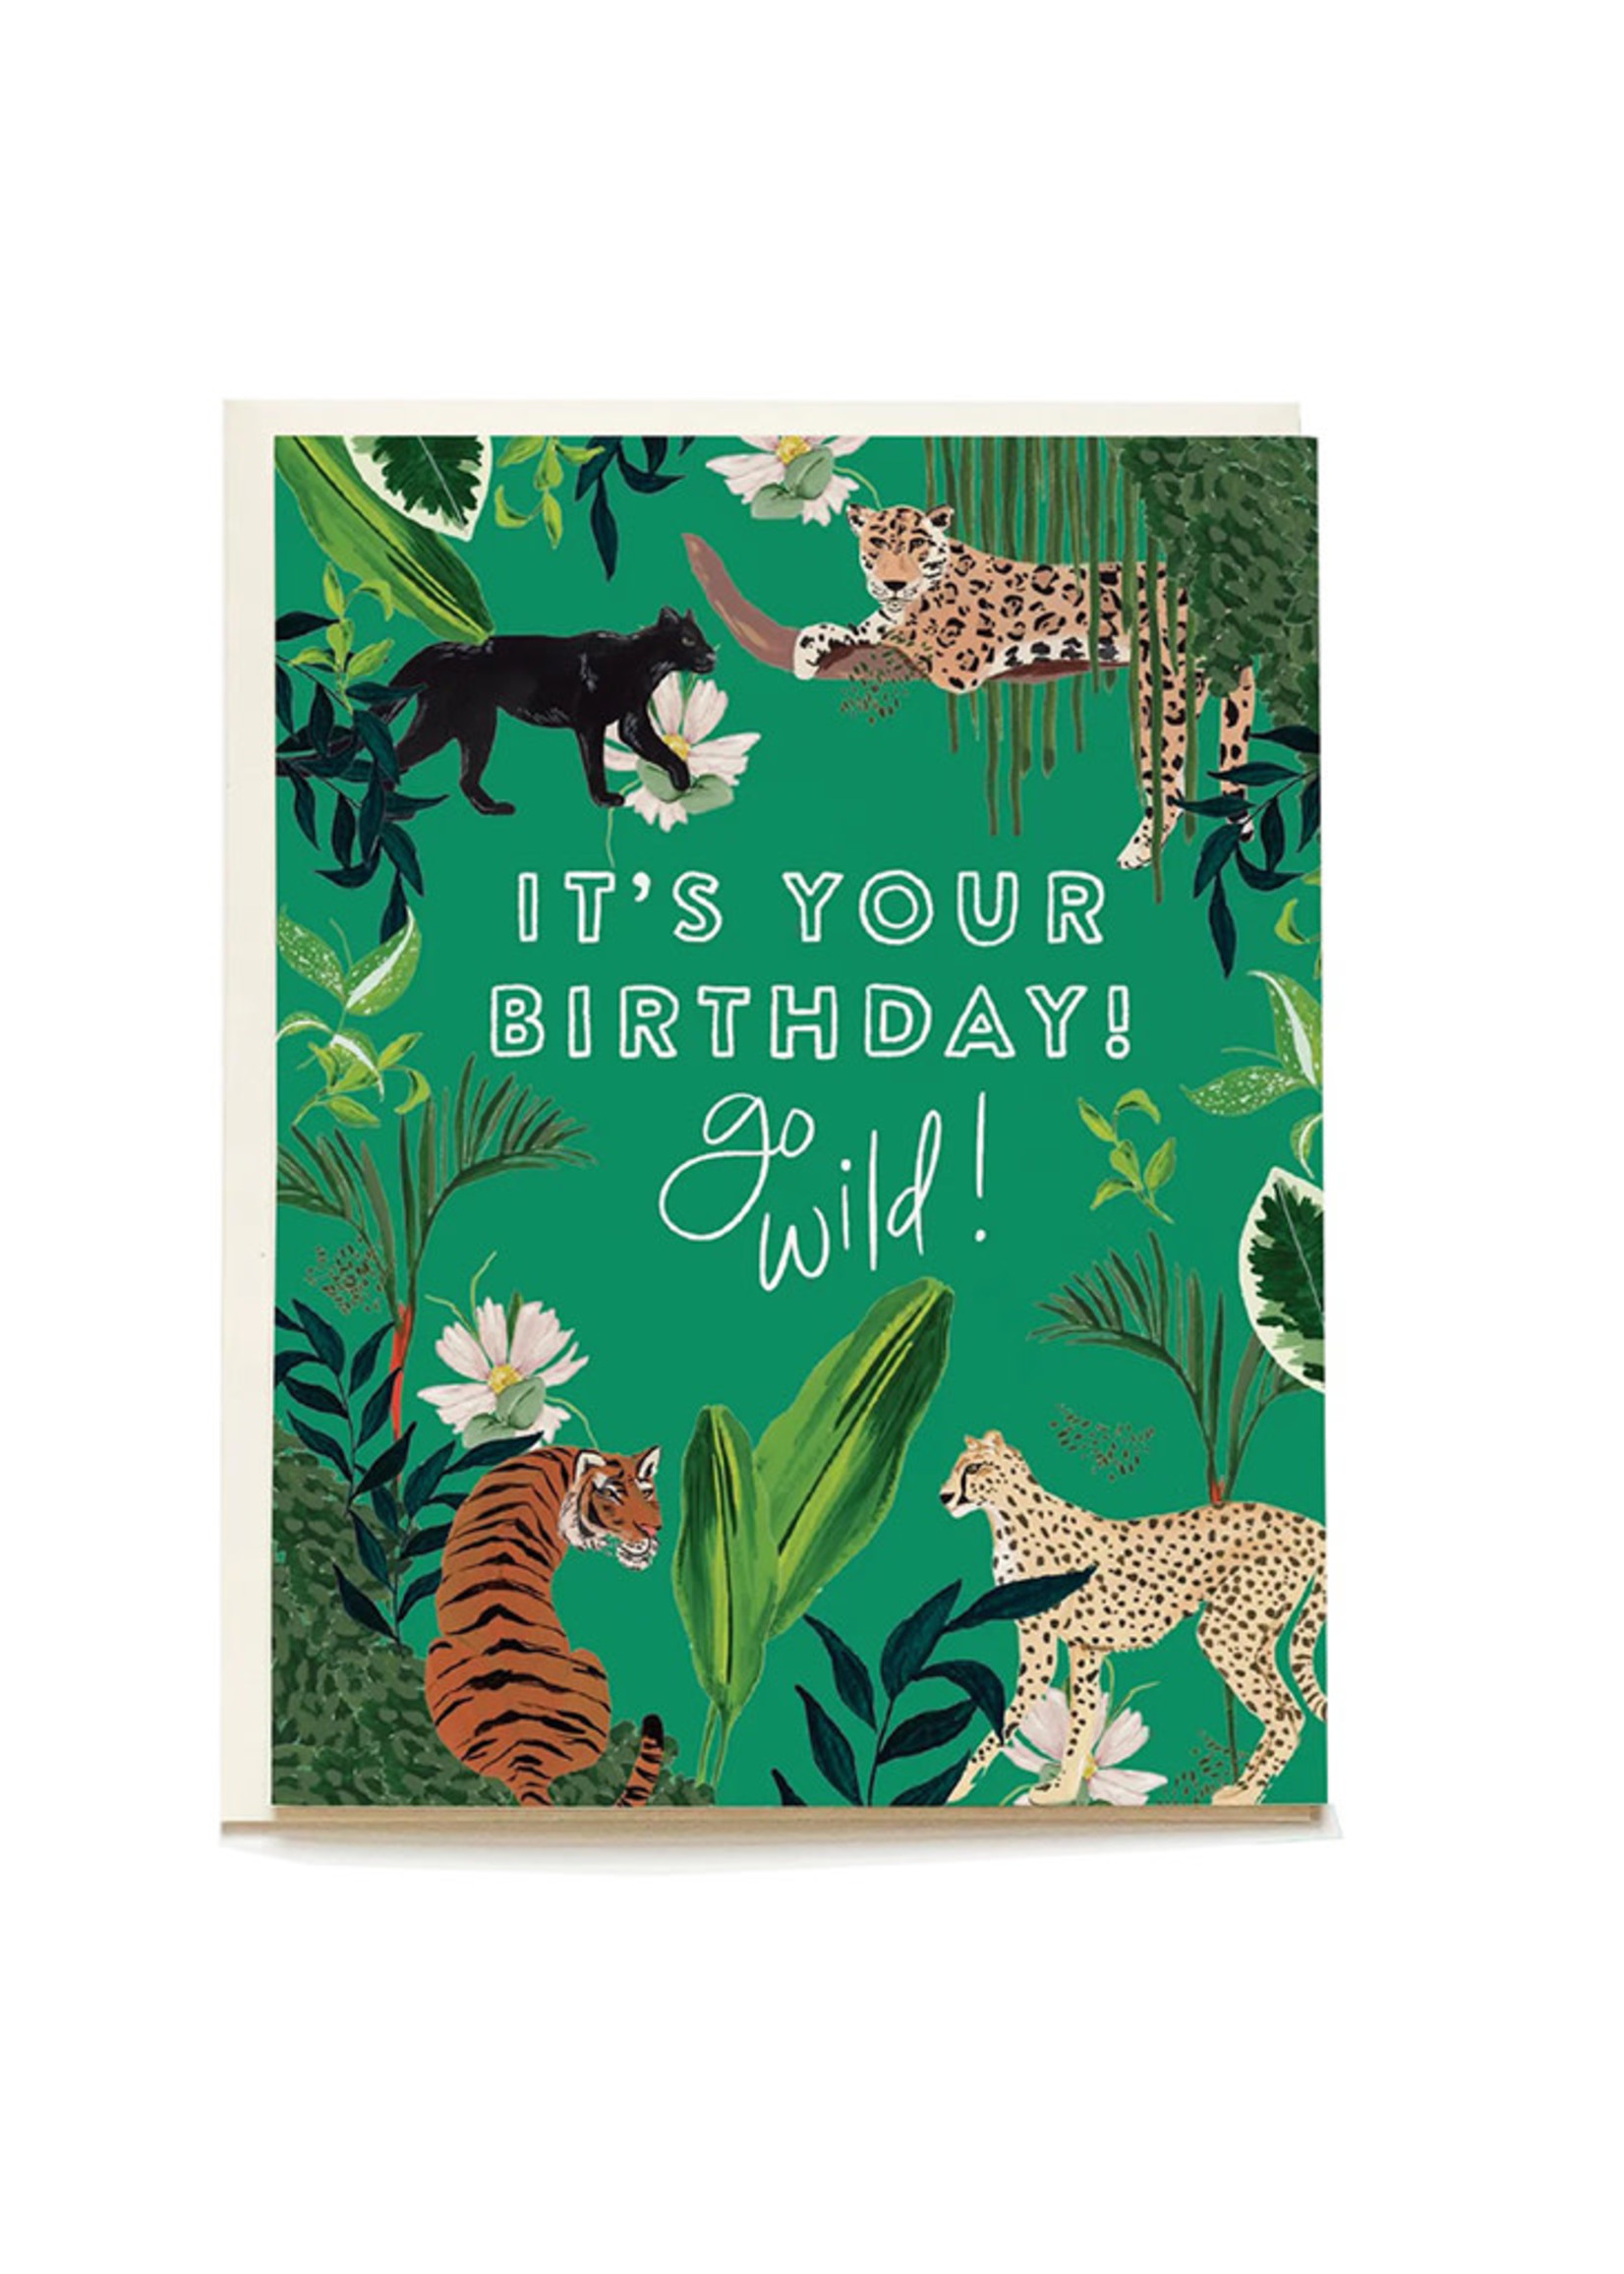 Go Wild Birthday Card